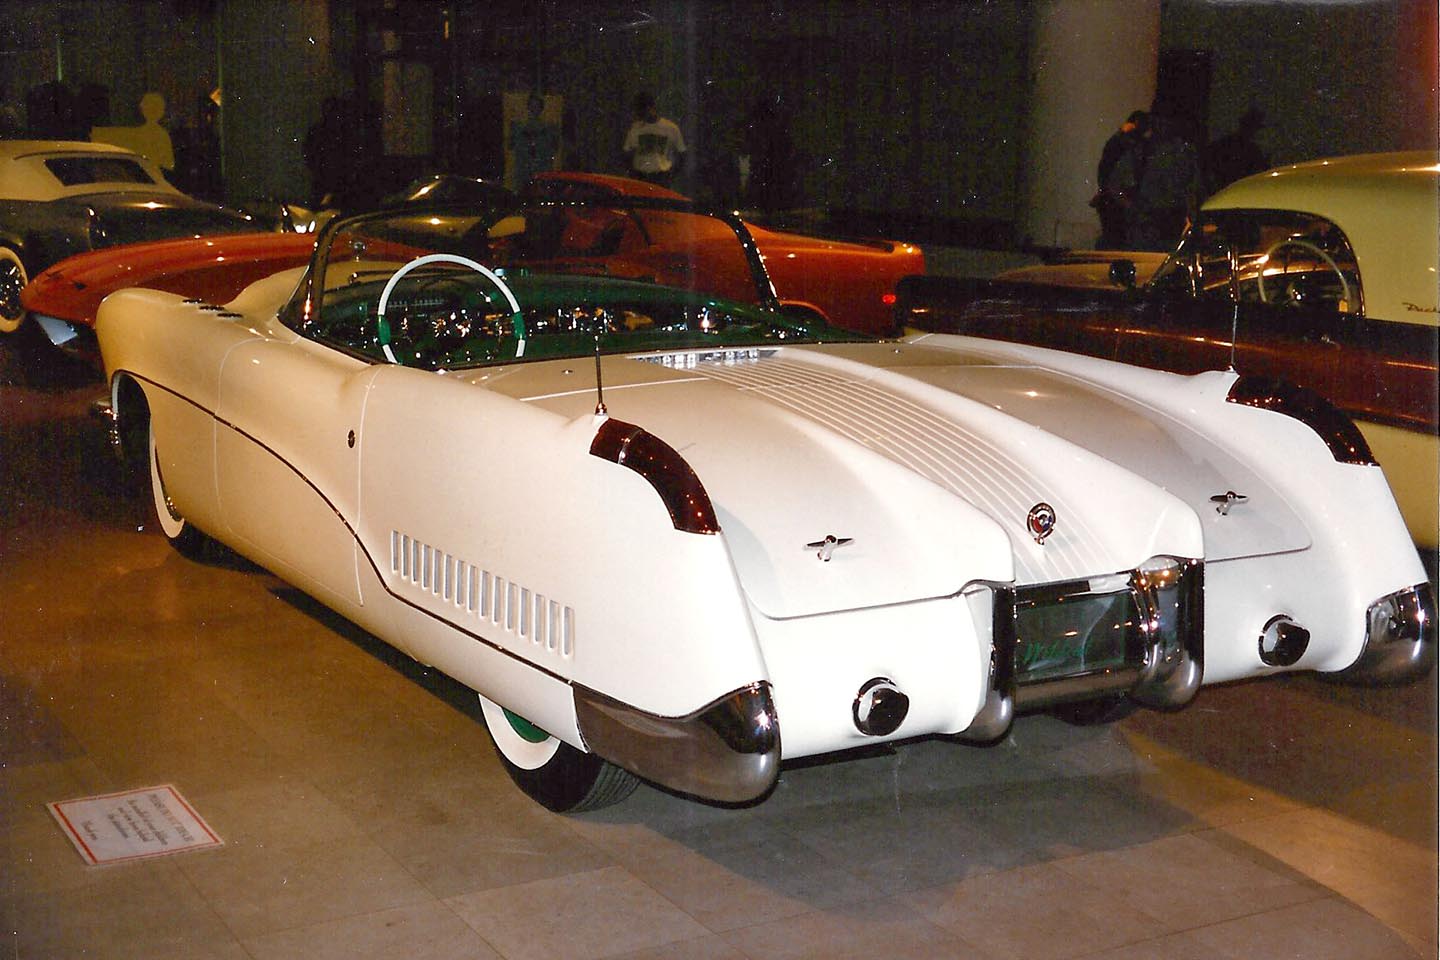 1953 Buick Wildcat I